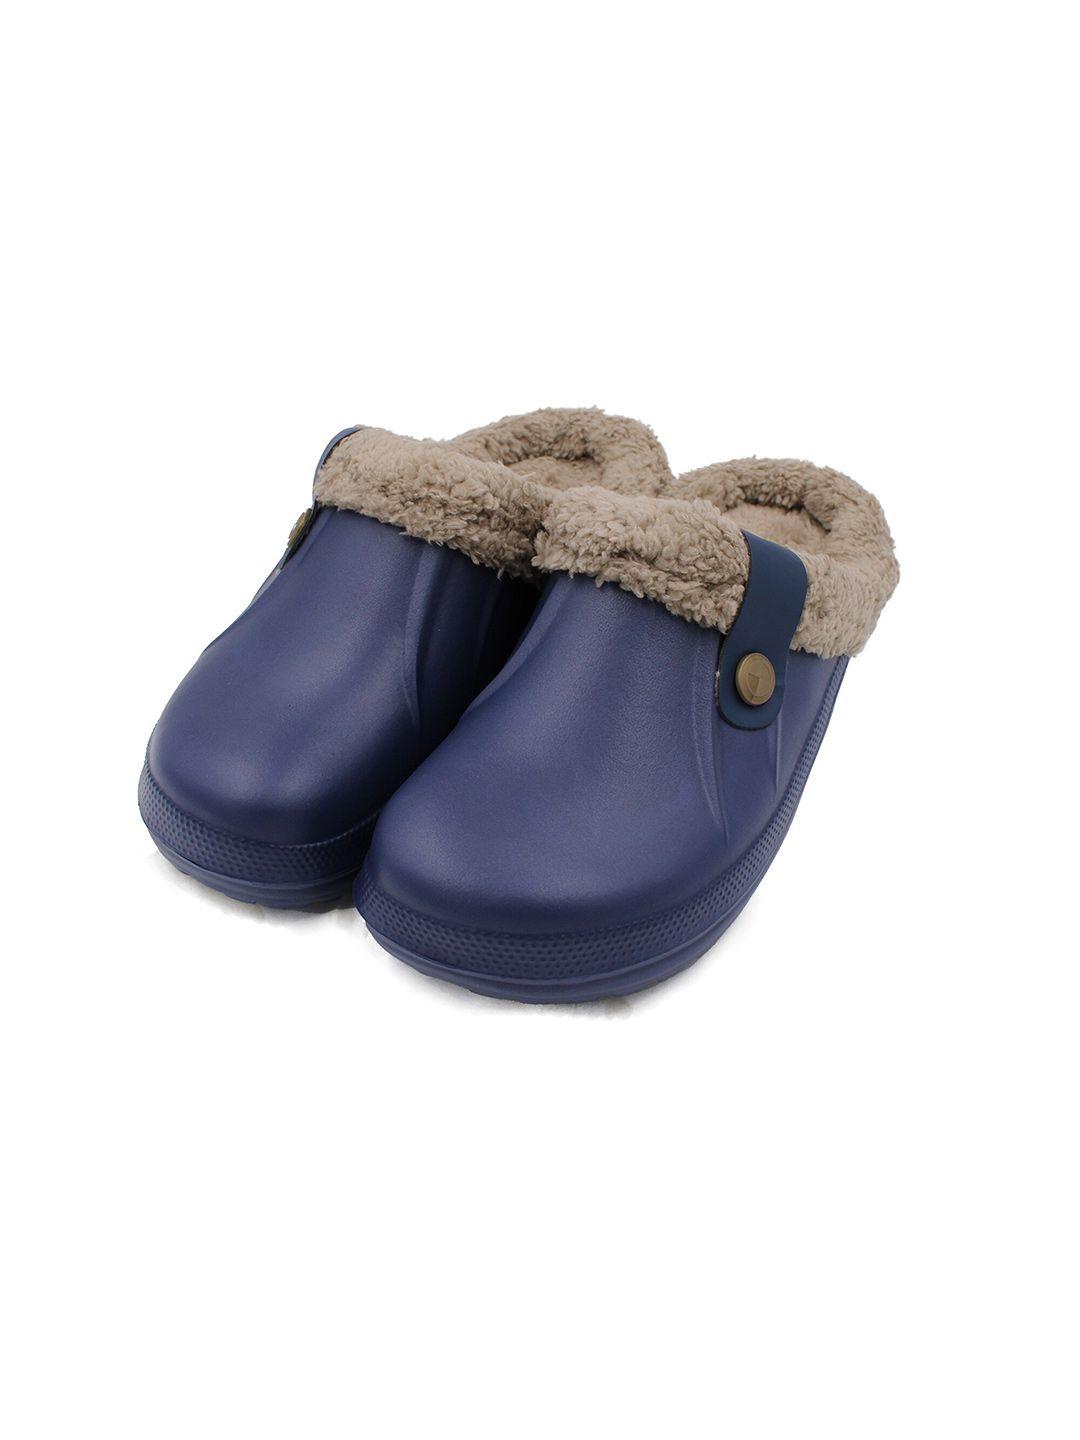 jenna men blue & brown room slippers